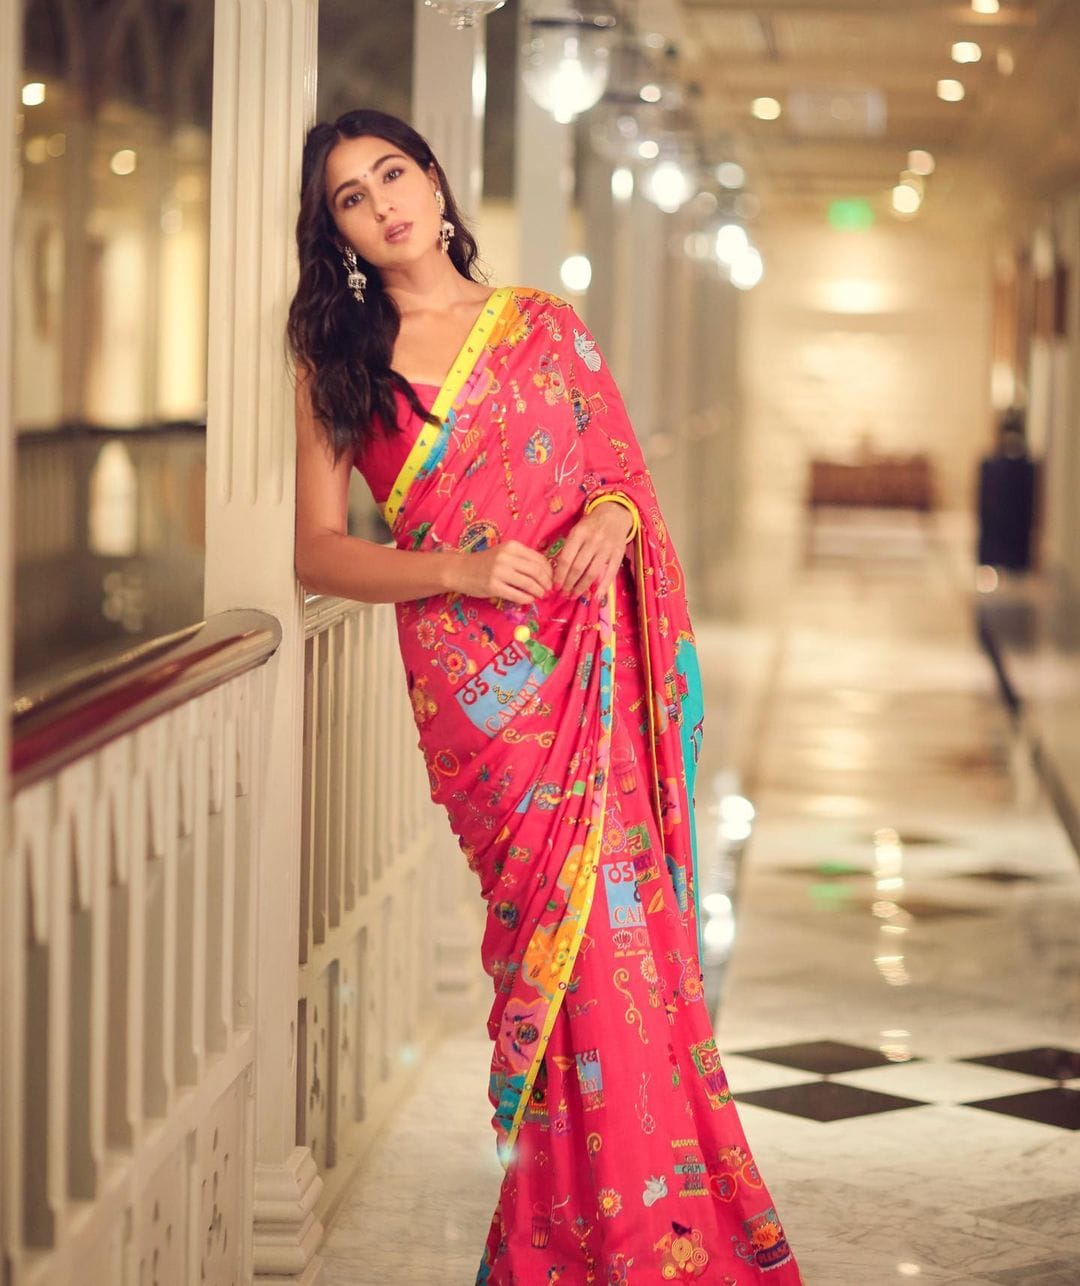 Sara Ali Khan looks pretty in the printed saree